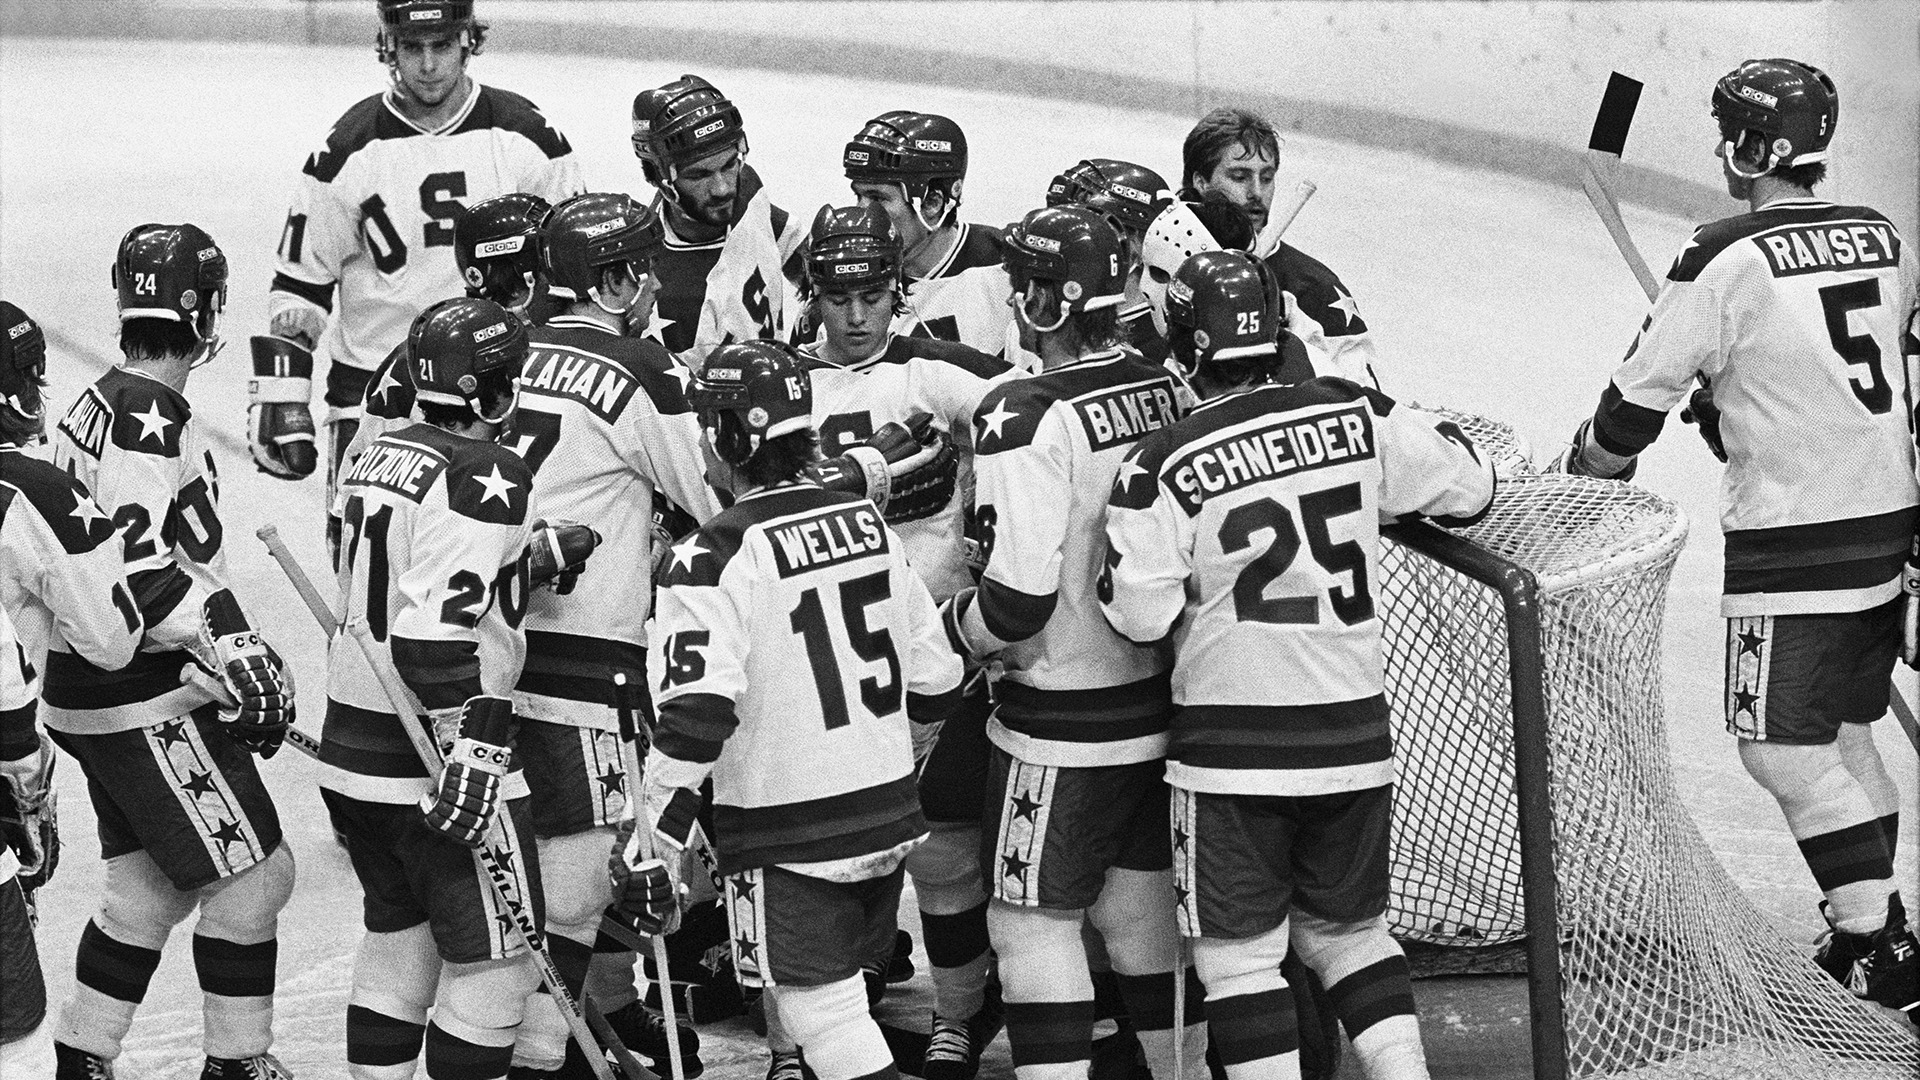  1980 Olympic Team Hockey 17 Jack O'Callahan 21 Mike